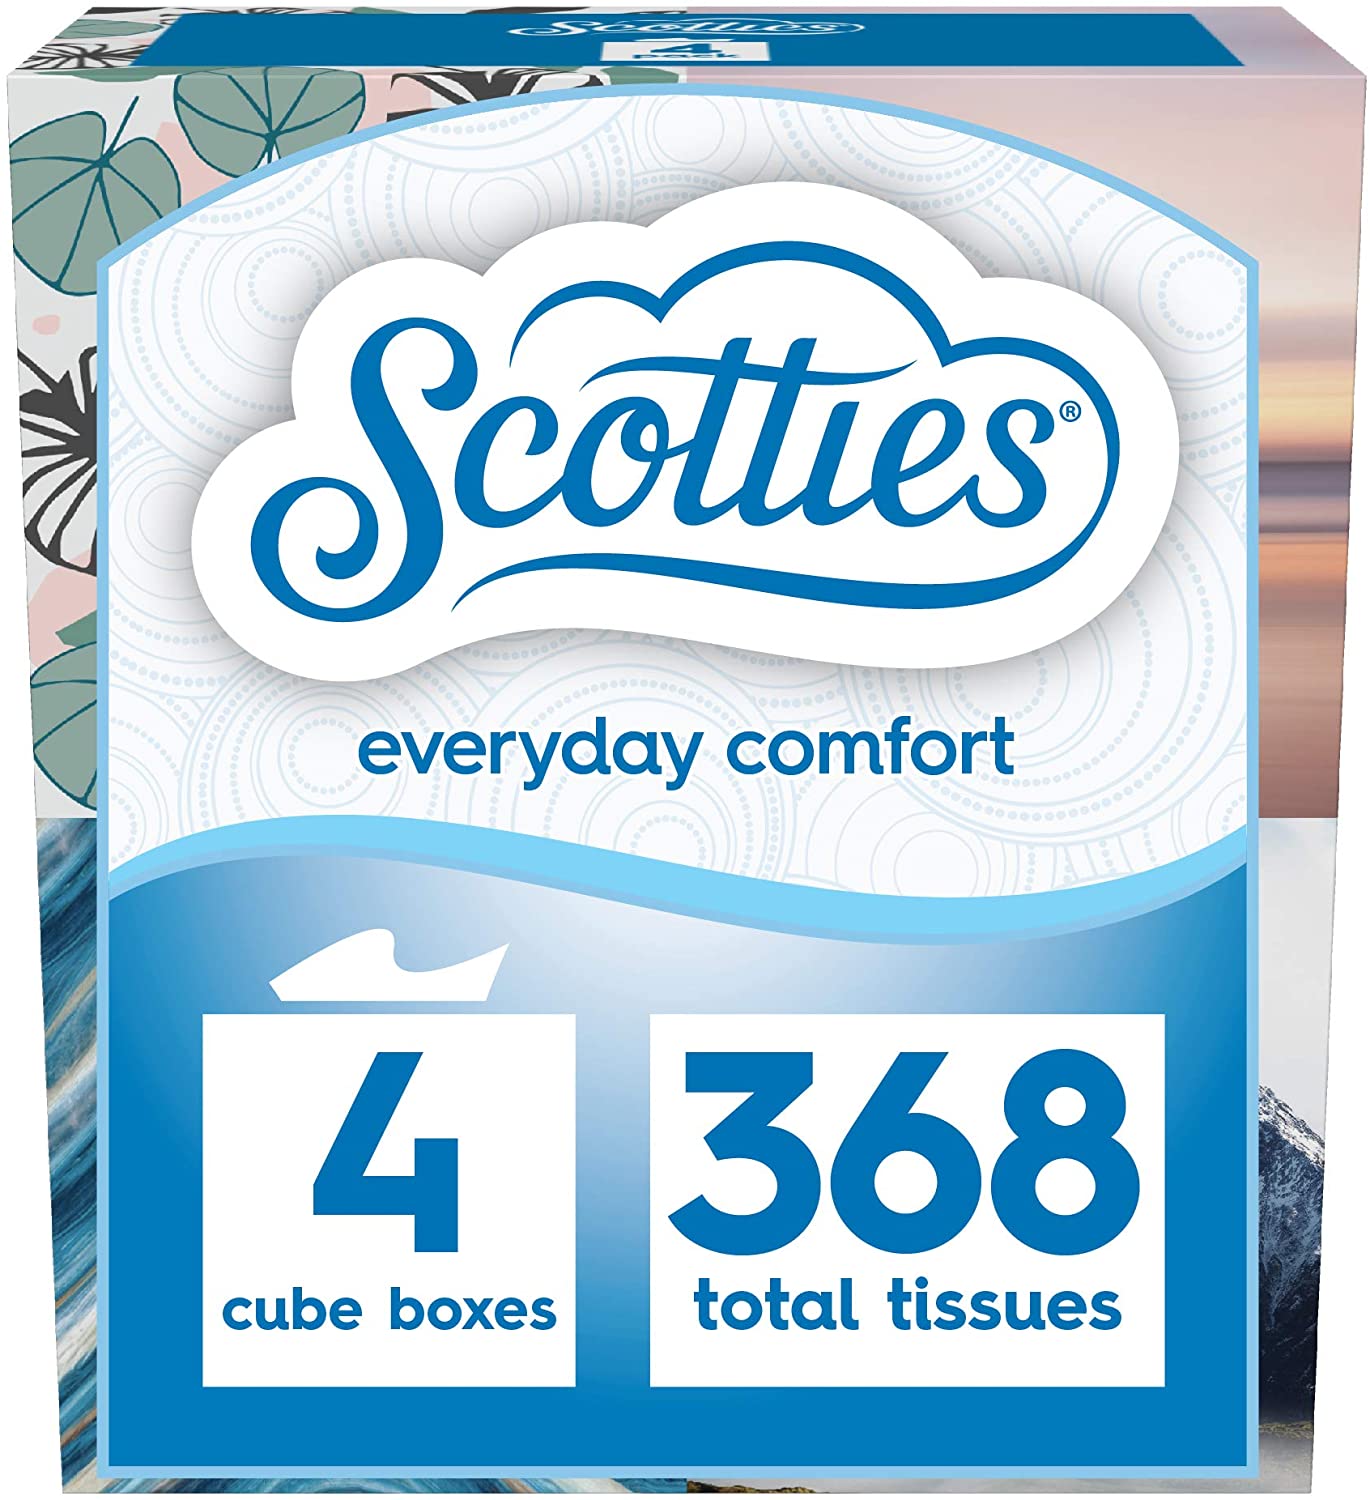 Scotties Everyday Comfort Facial Tissues Amazon Deal!